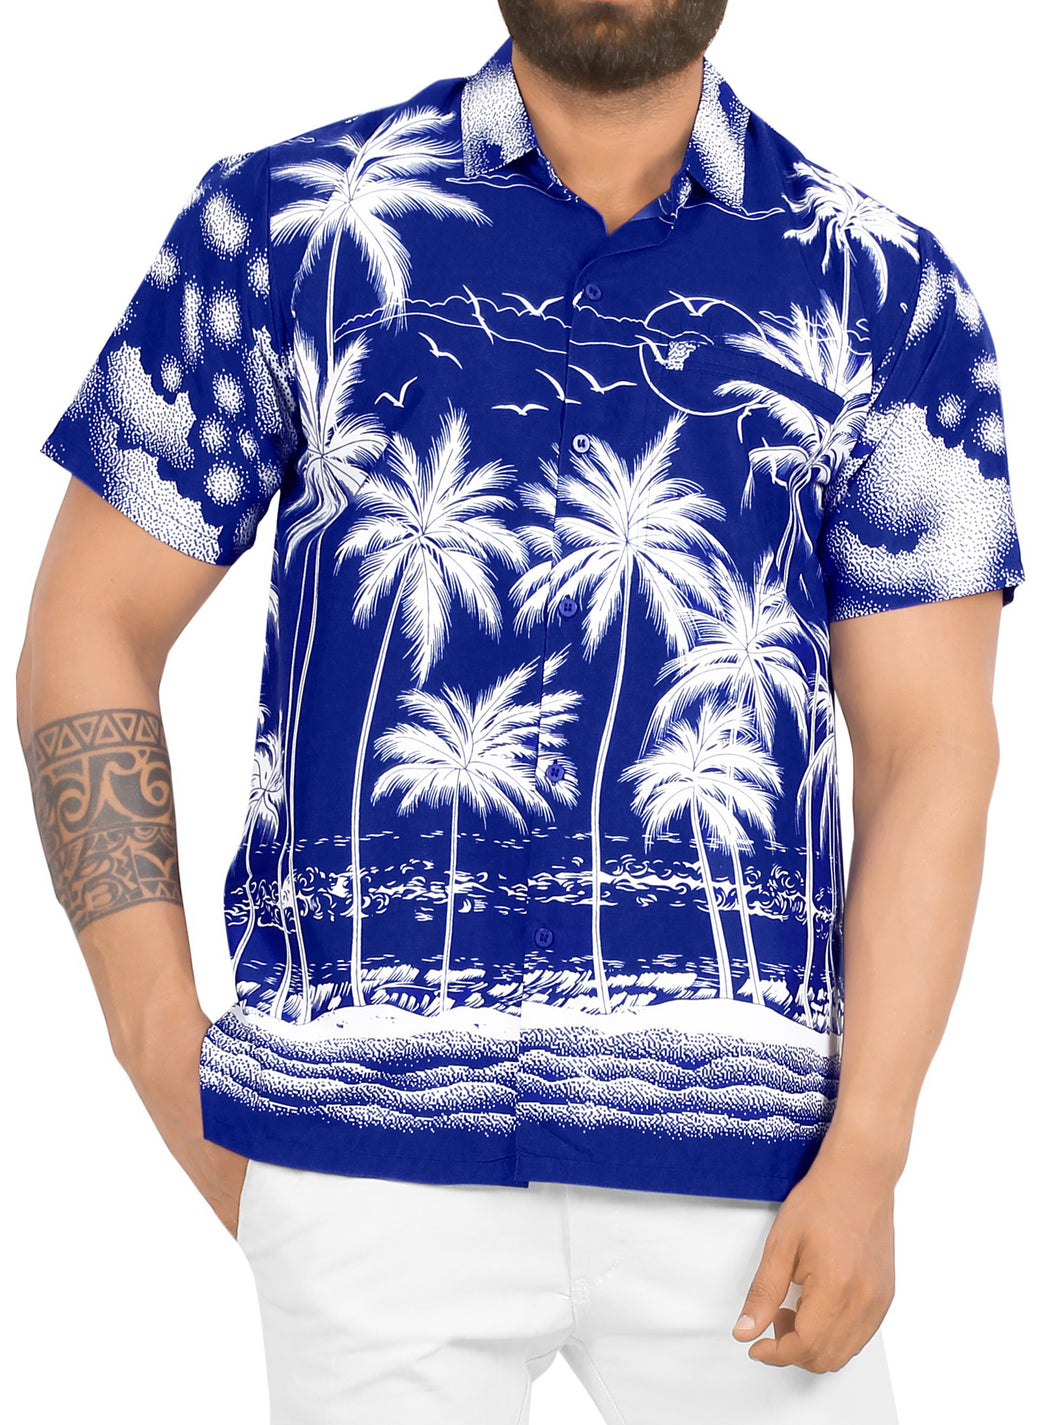 LA LEELA Men Regular Beach Casual hawaiian Shirt for Aloha Tropical Beach front Short sleeve Palm Tree Printed Blue